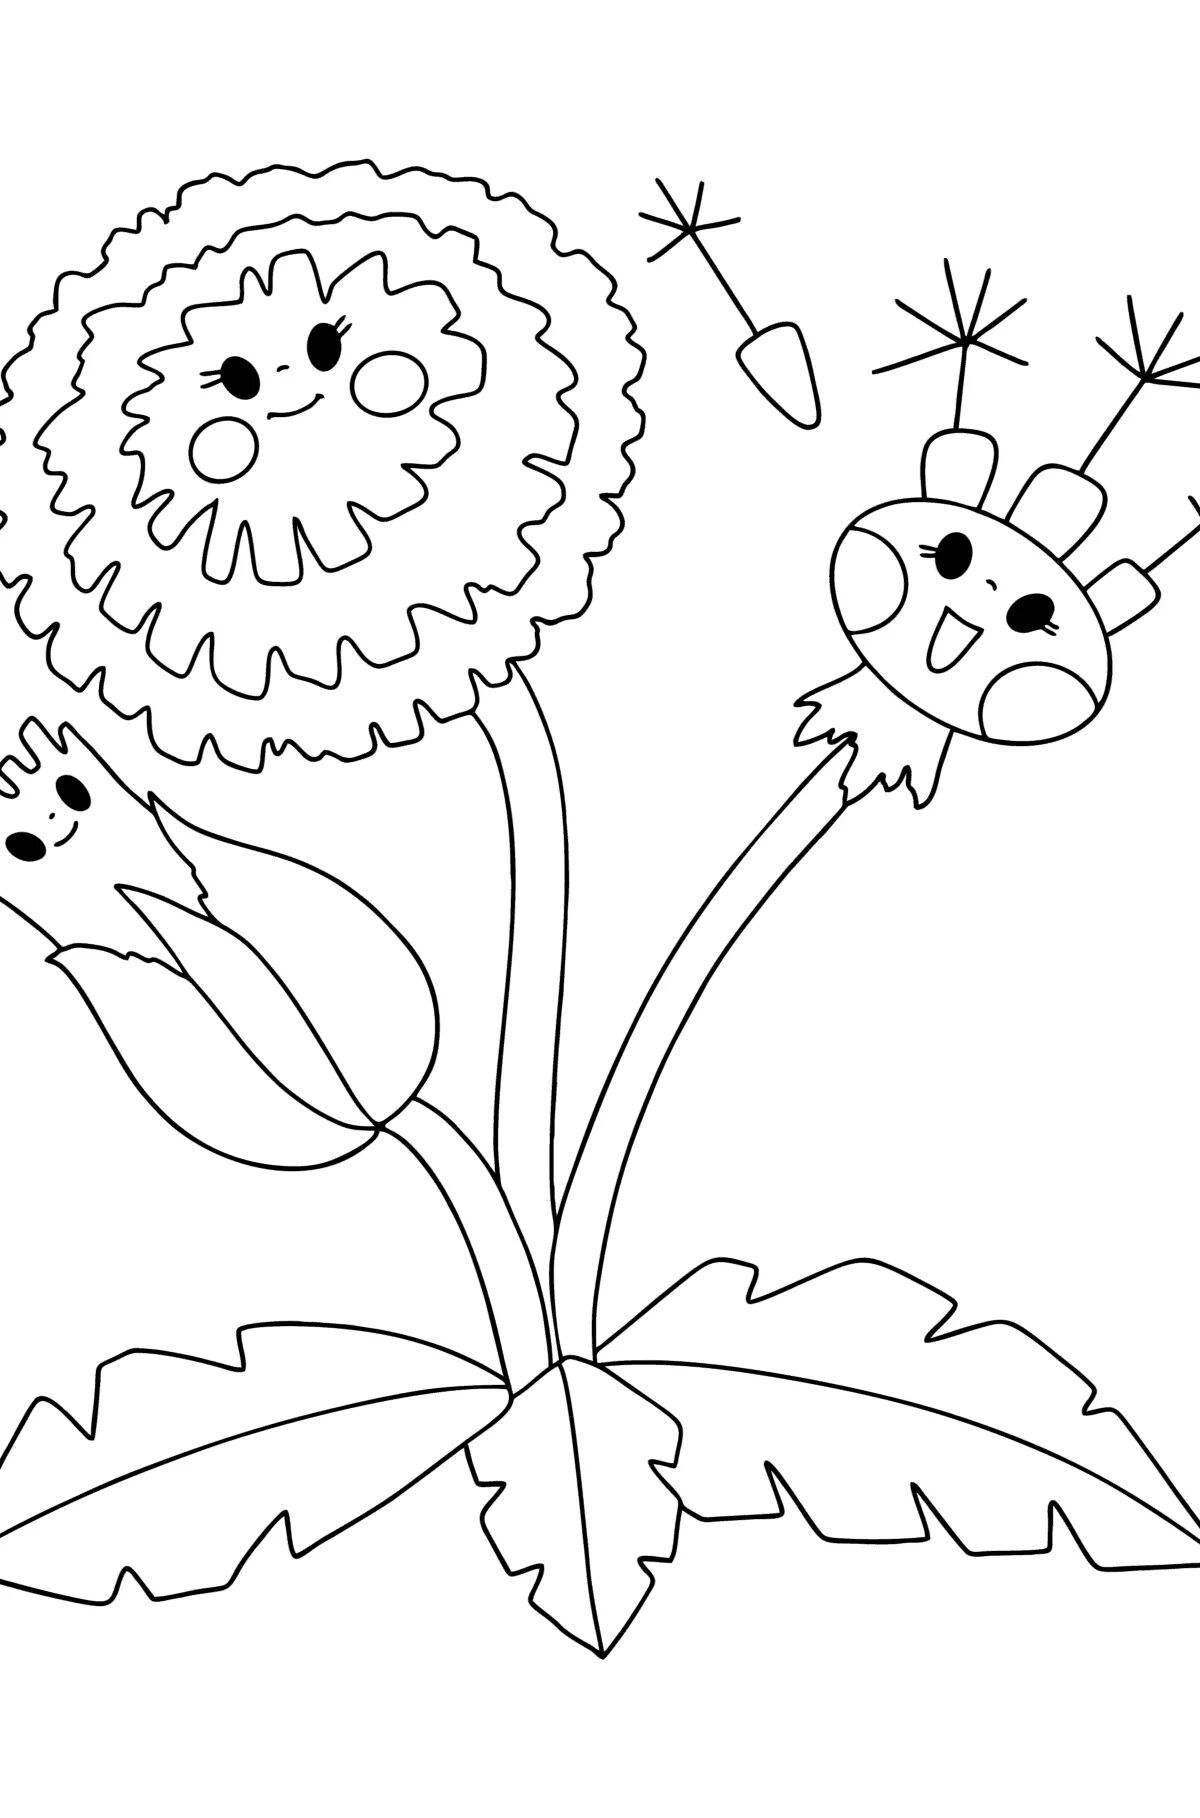 Joyful dandelion coloring for kids